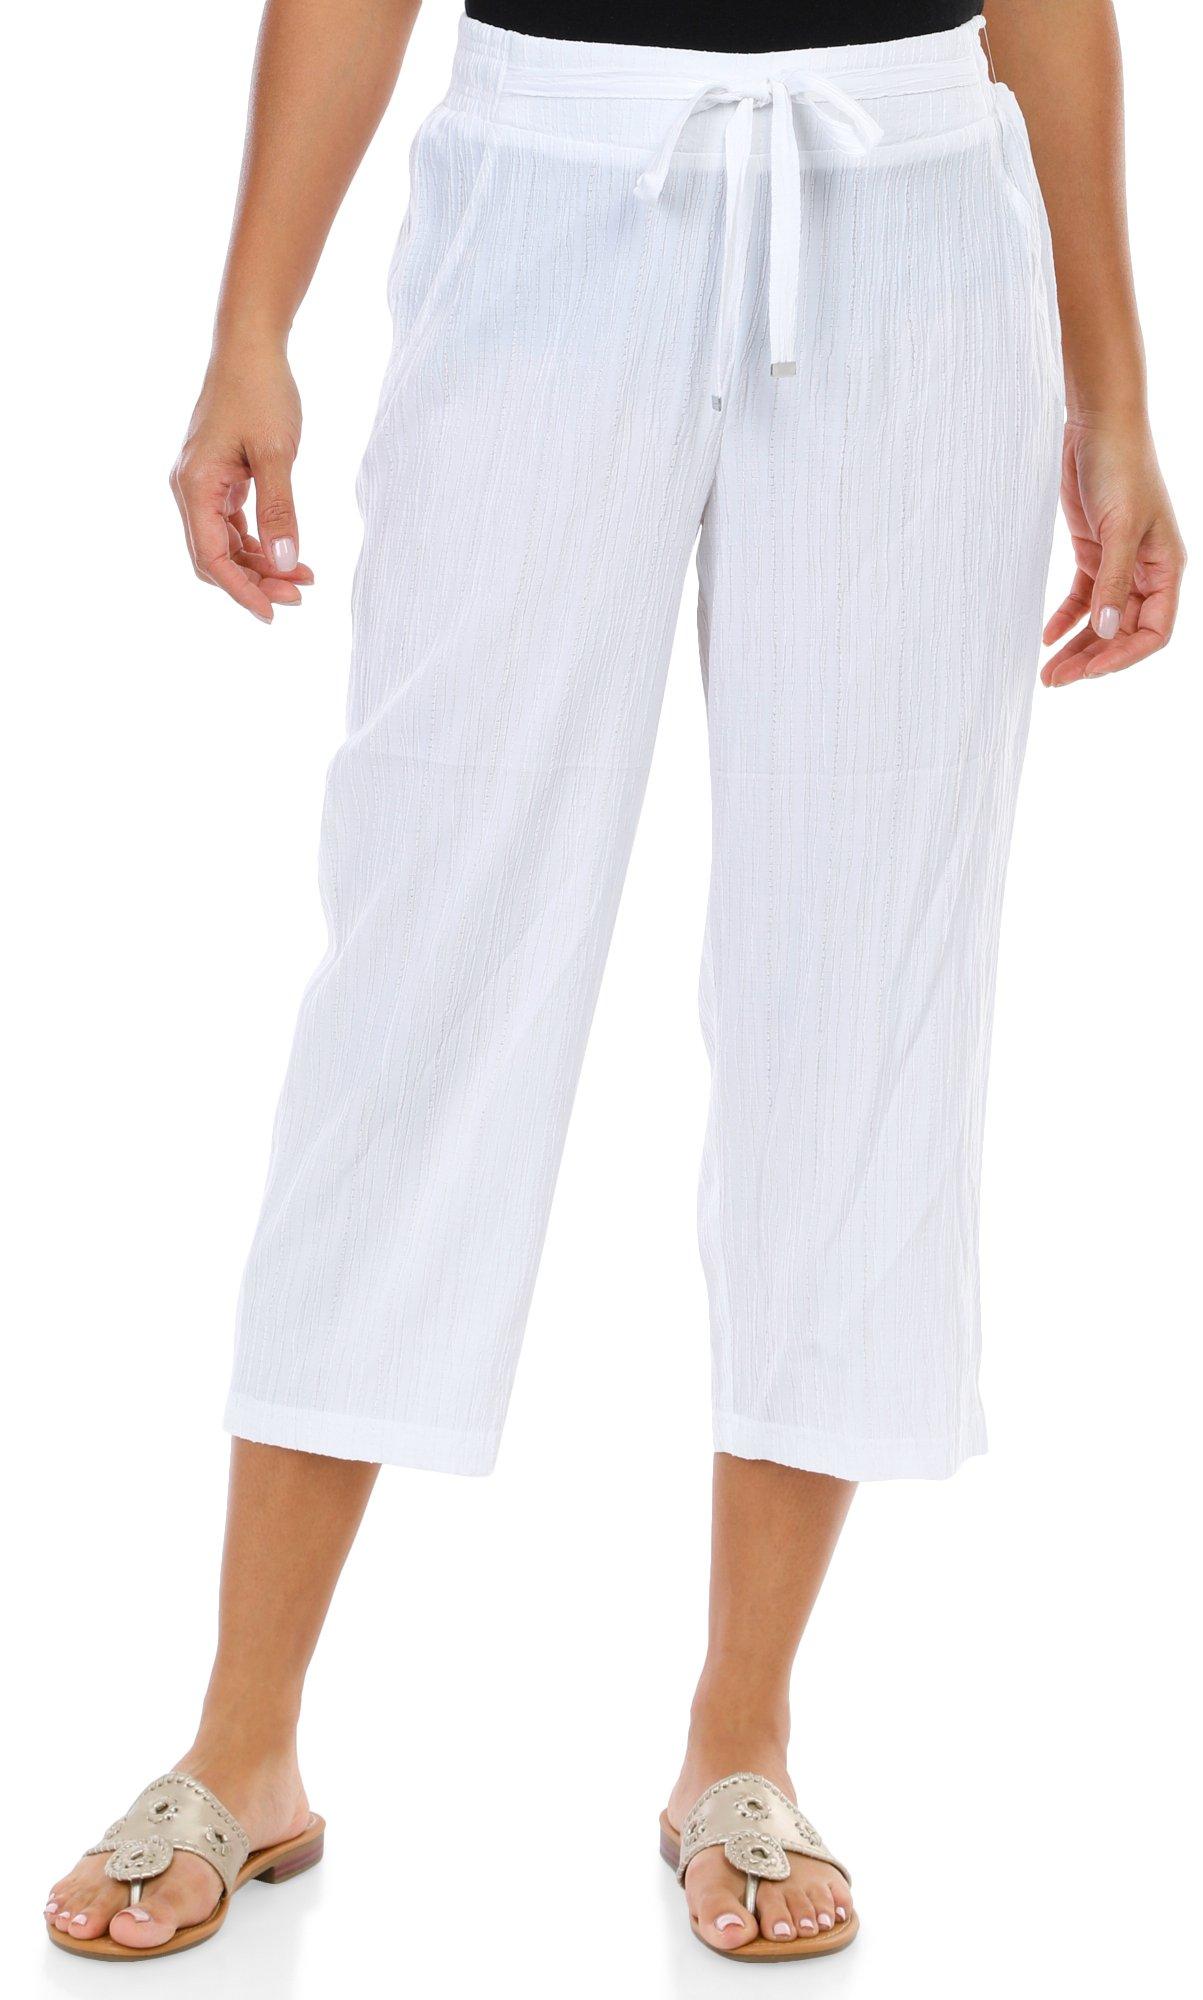 Women's Petite Solid Capri Pants